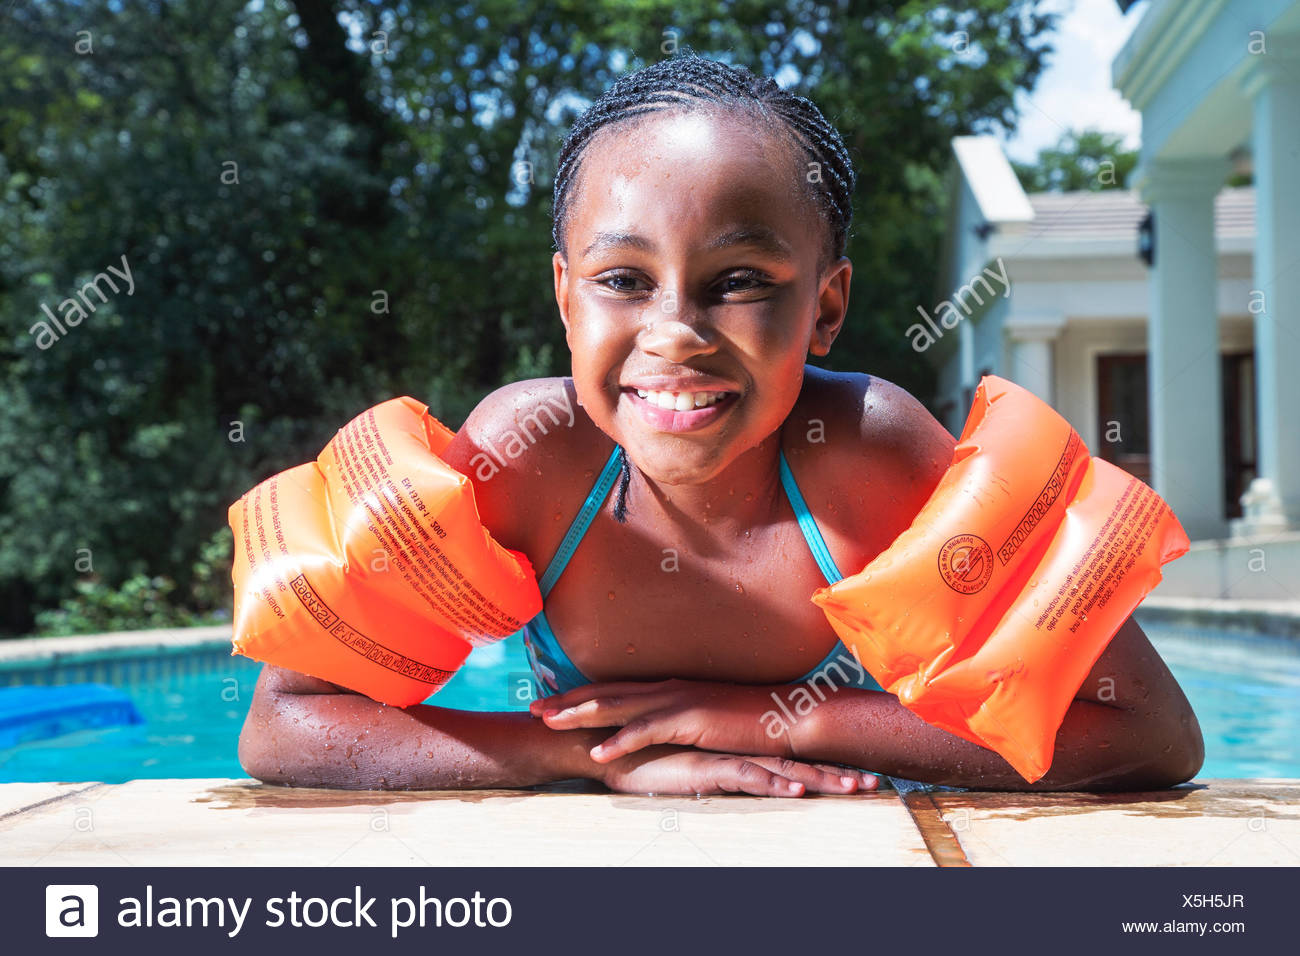 child arm floaties